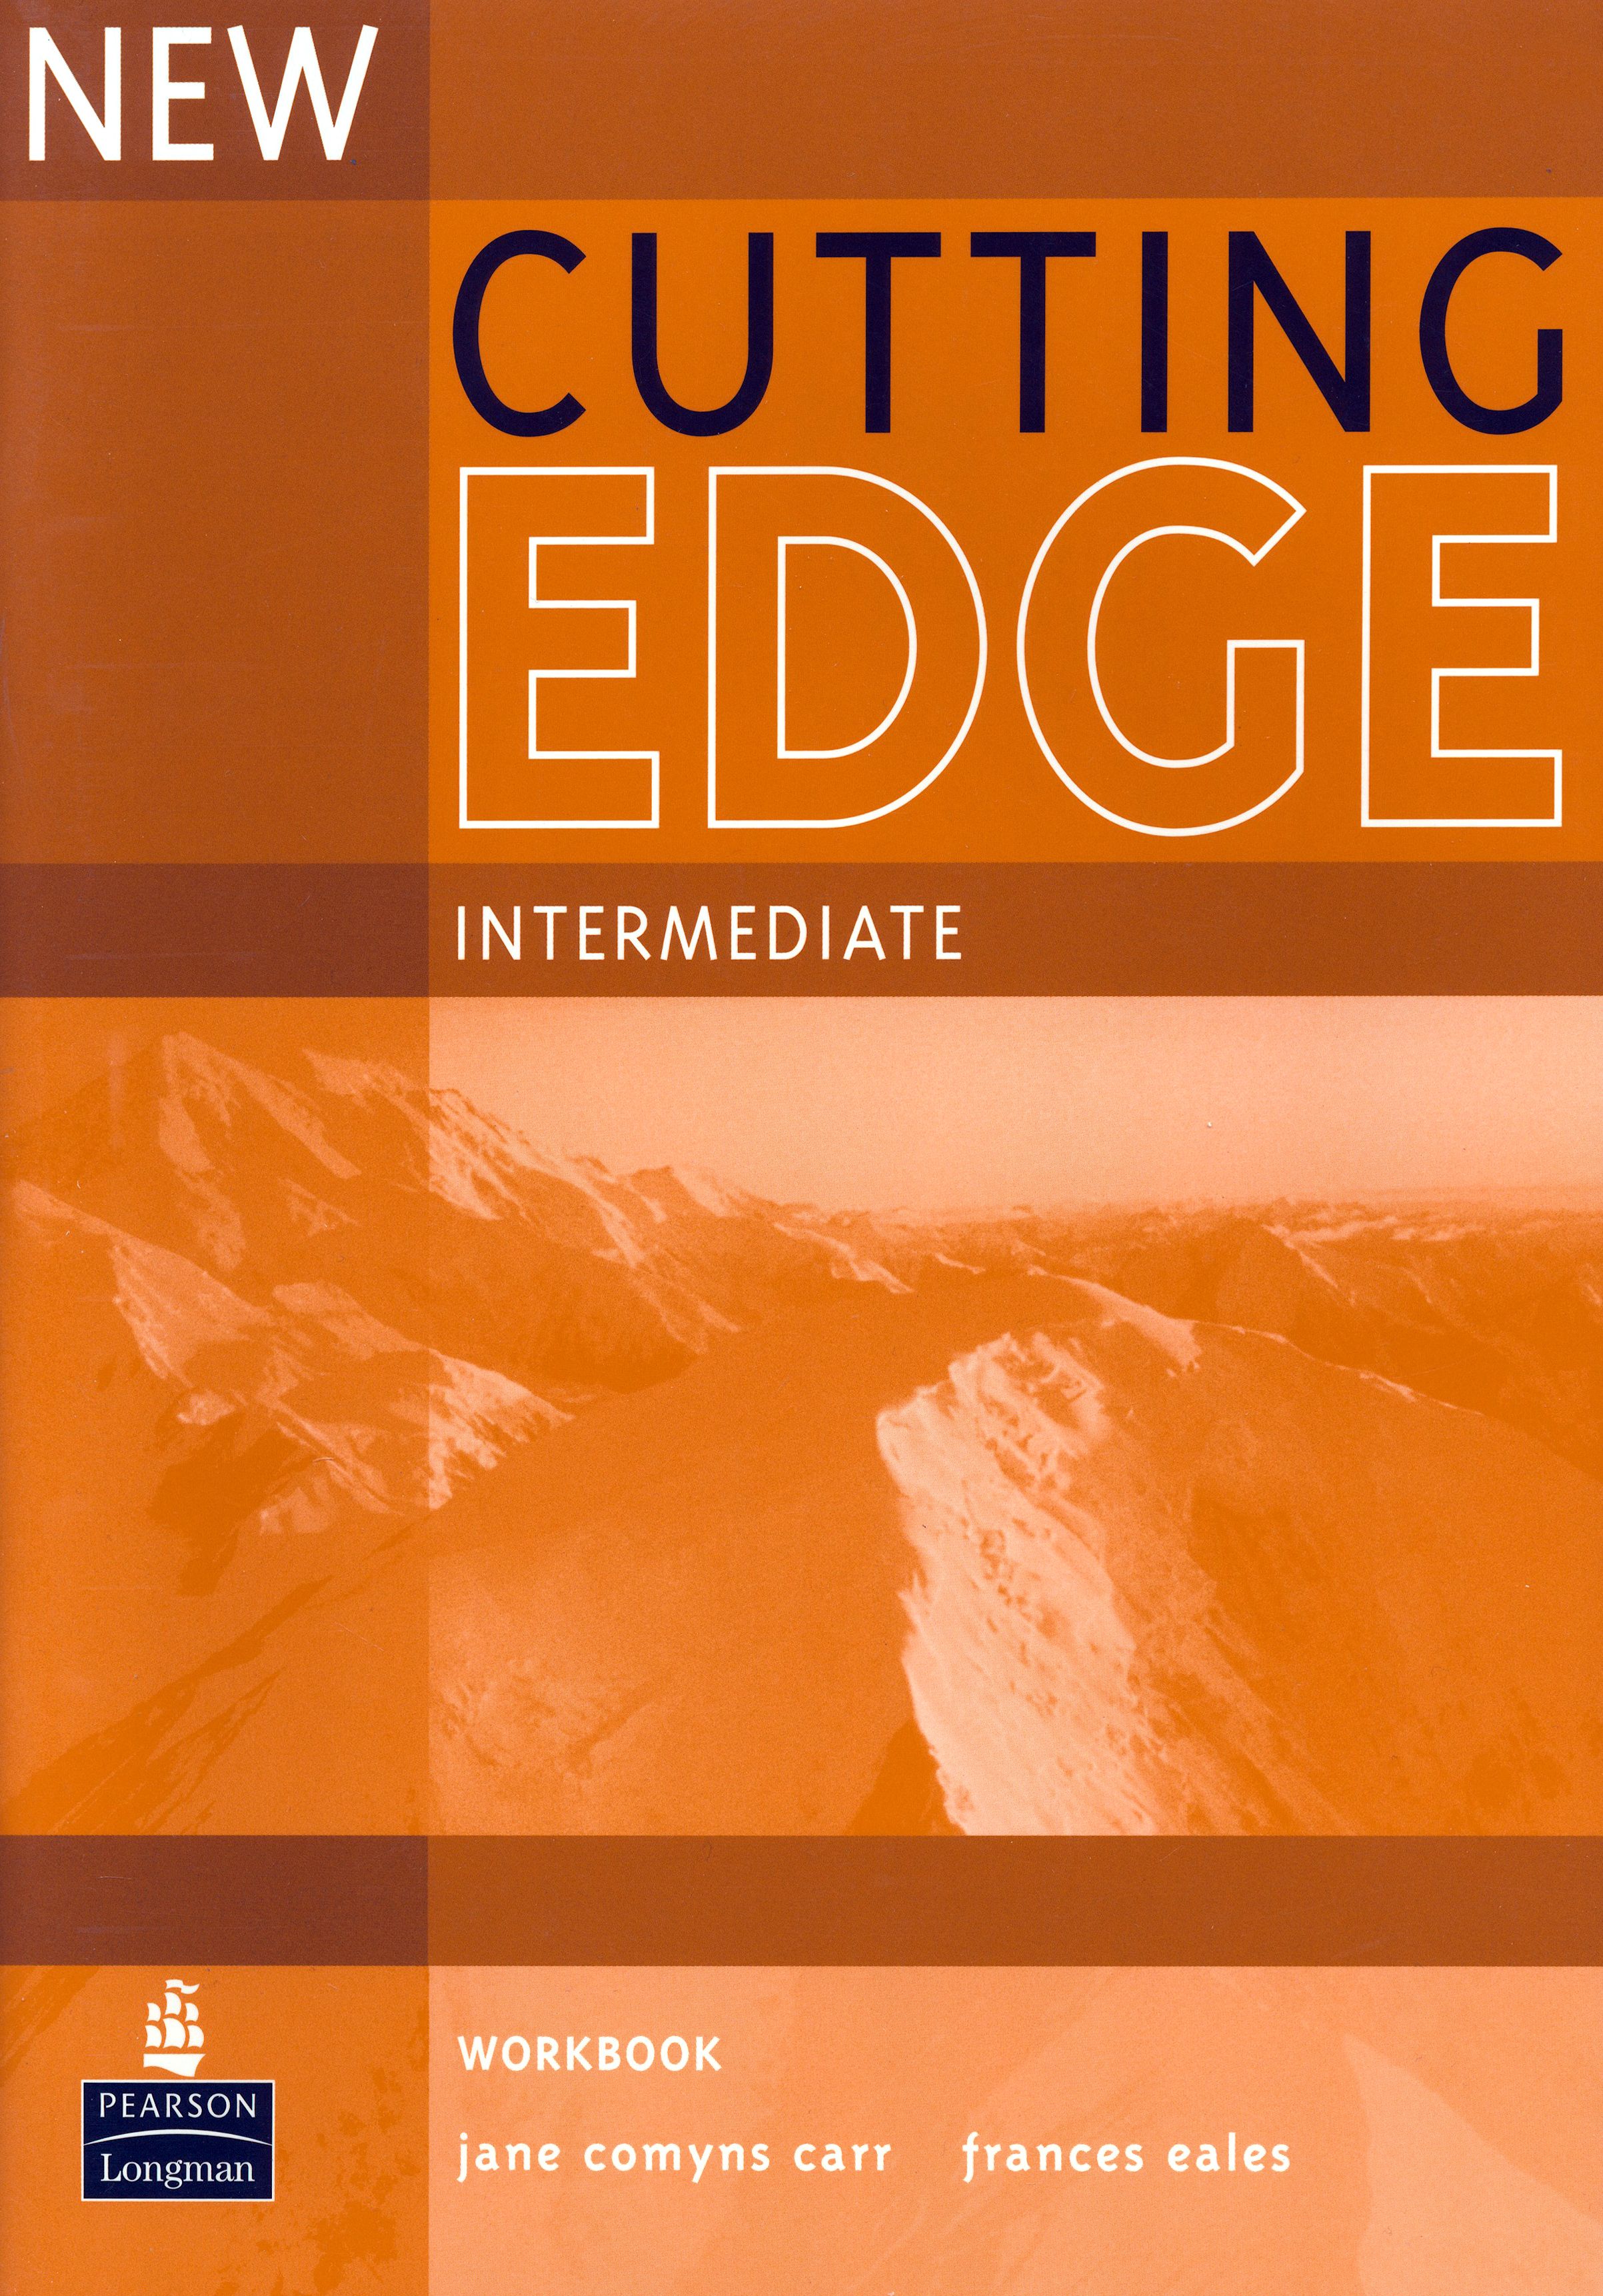 New cutting intermediate. Cutting Edge Intermediate 2005. New Cutting Edge Intermediate Workbook. Cutting Edge Intermediate 3rd Edition. Cutting Edge Intermediate Keys Workbook.